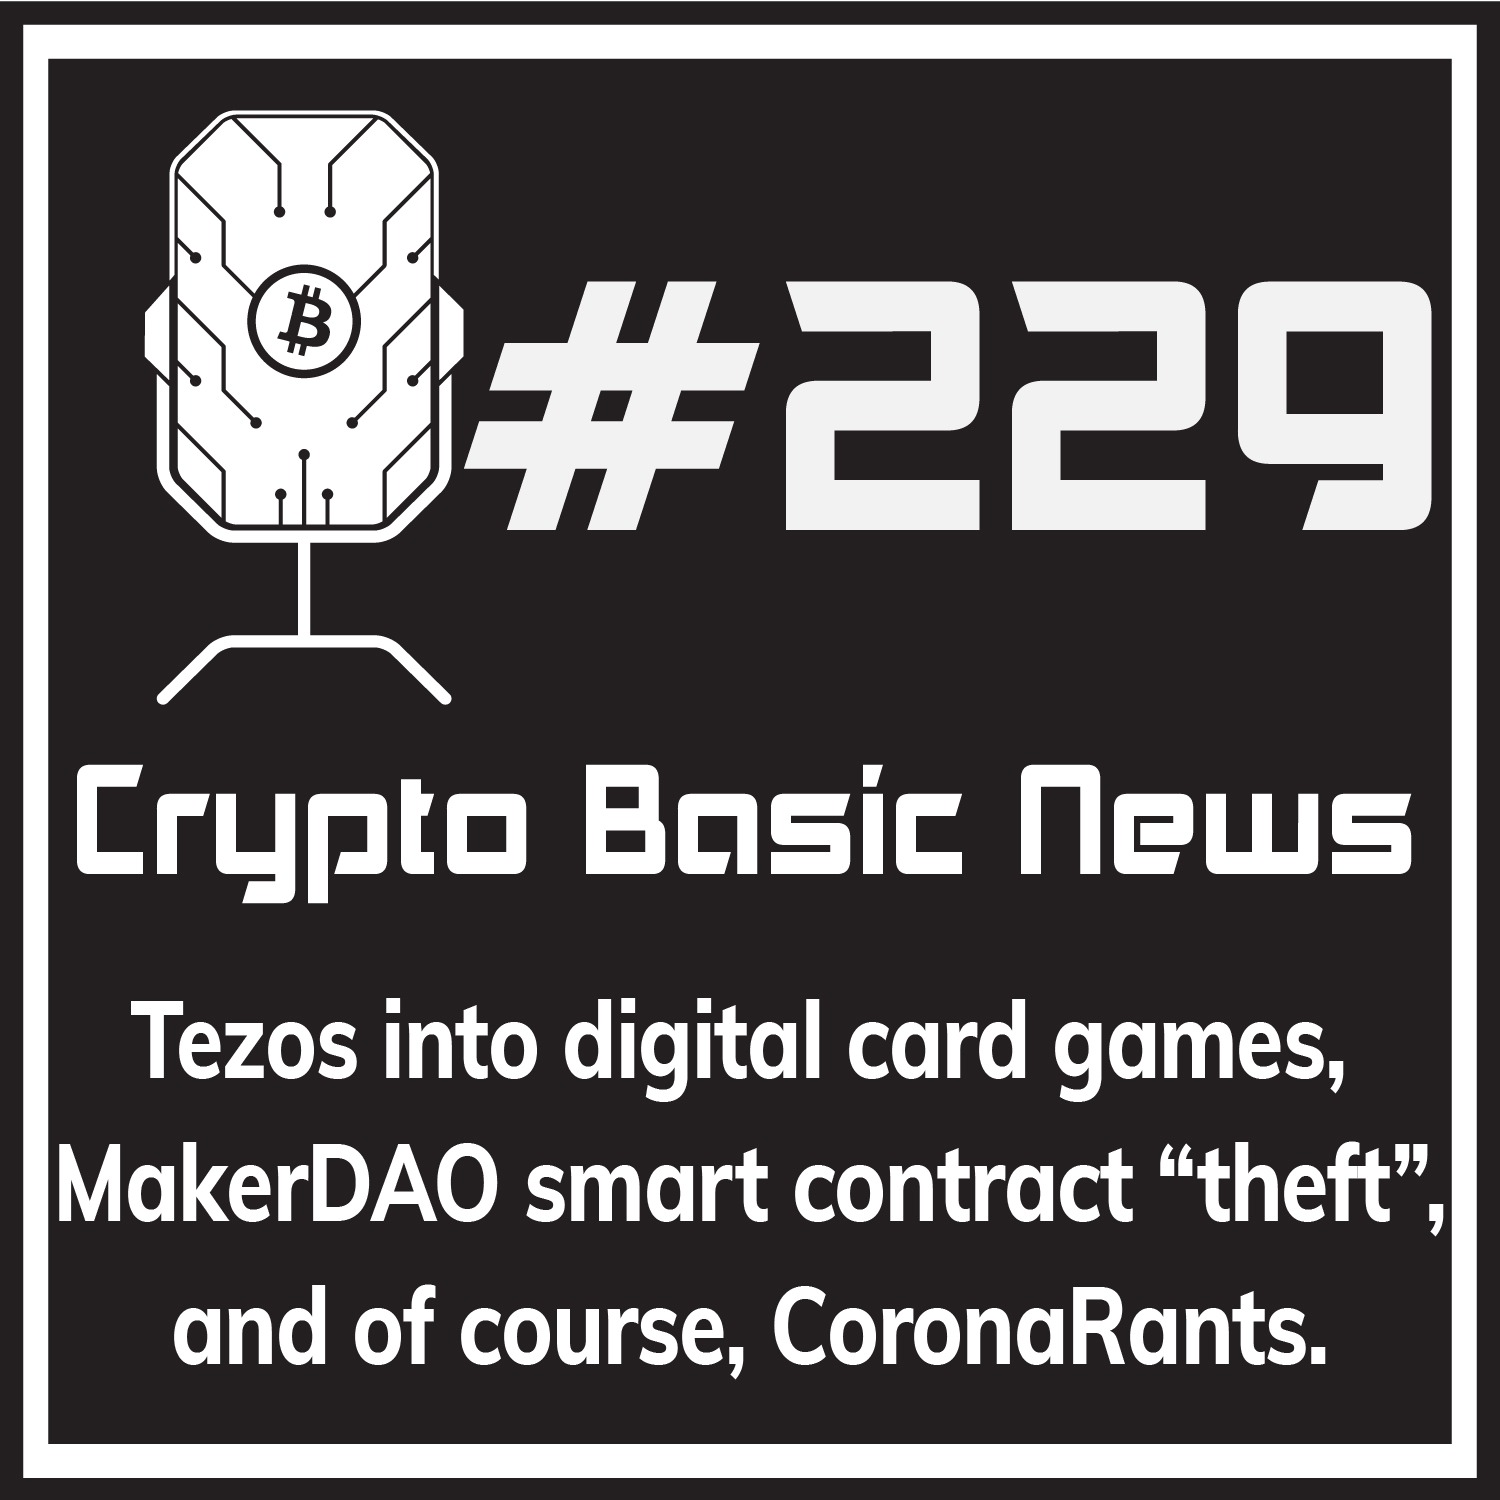 Episode 229 - Tezos into digital card games, MakerDAO smart contract "theft", and of course, CoronaRants.